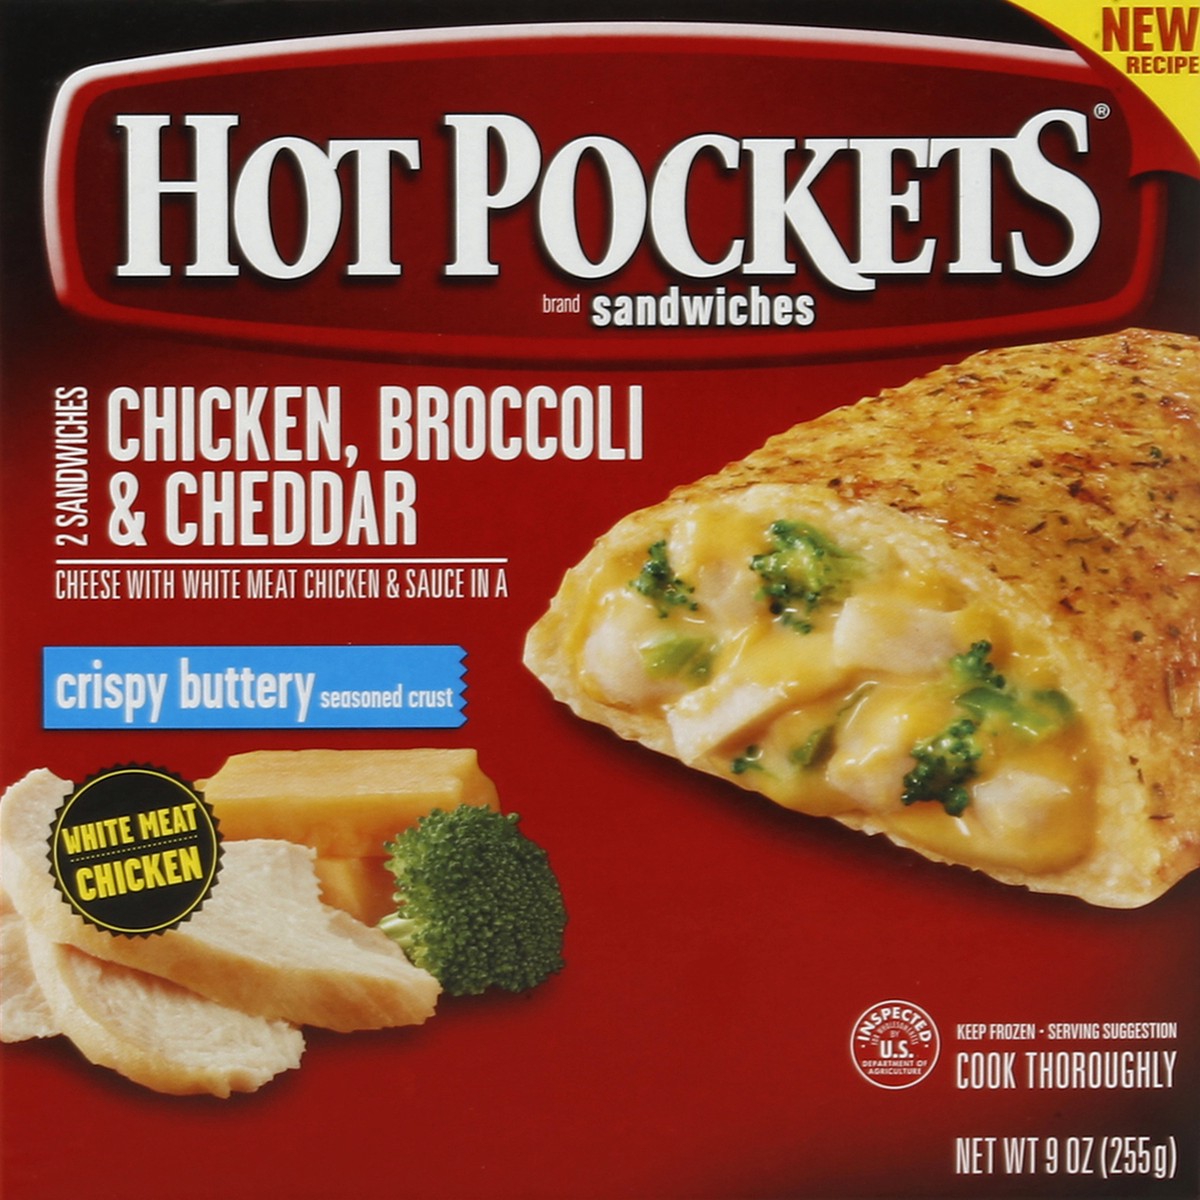 slide 8 of 8, Hot Pockets Frozen Snacks Chicken, Broccoli & Cheddar Crispy Buttery Crust Frozen Sandwiches, 8.5 oz